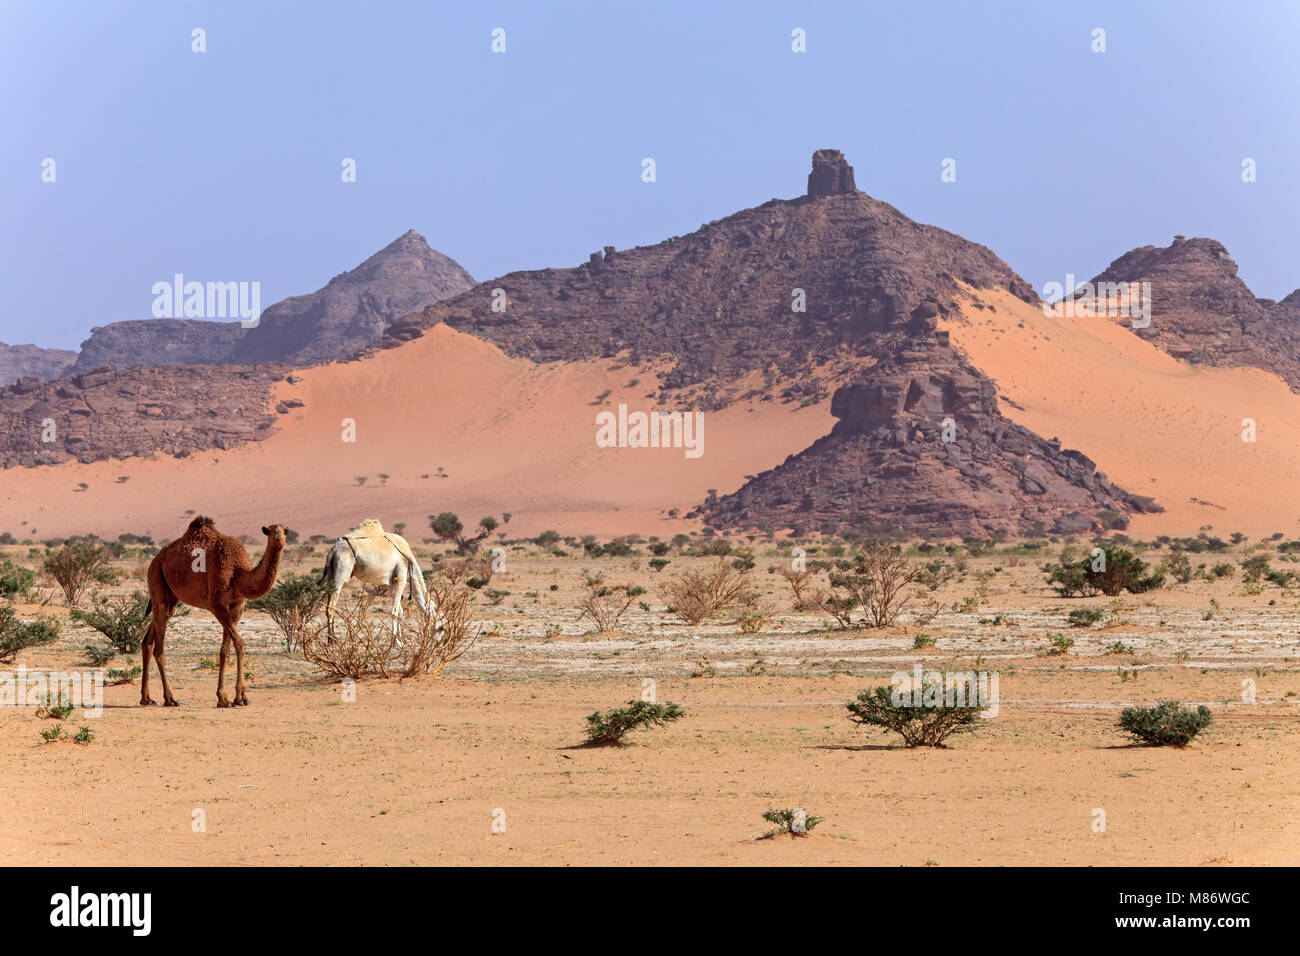 Camels in the desert, Riyadh, Saudi Arabia Stock Photo